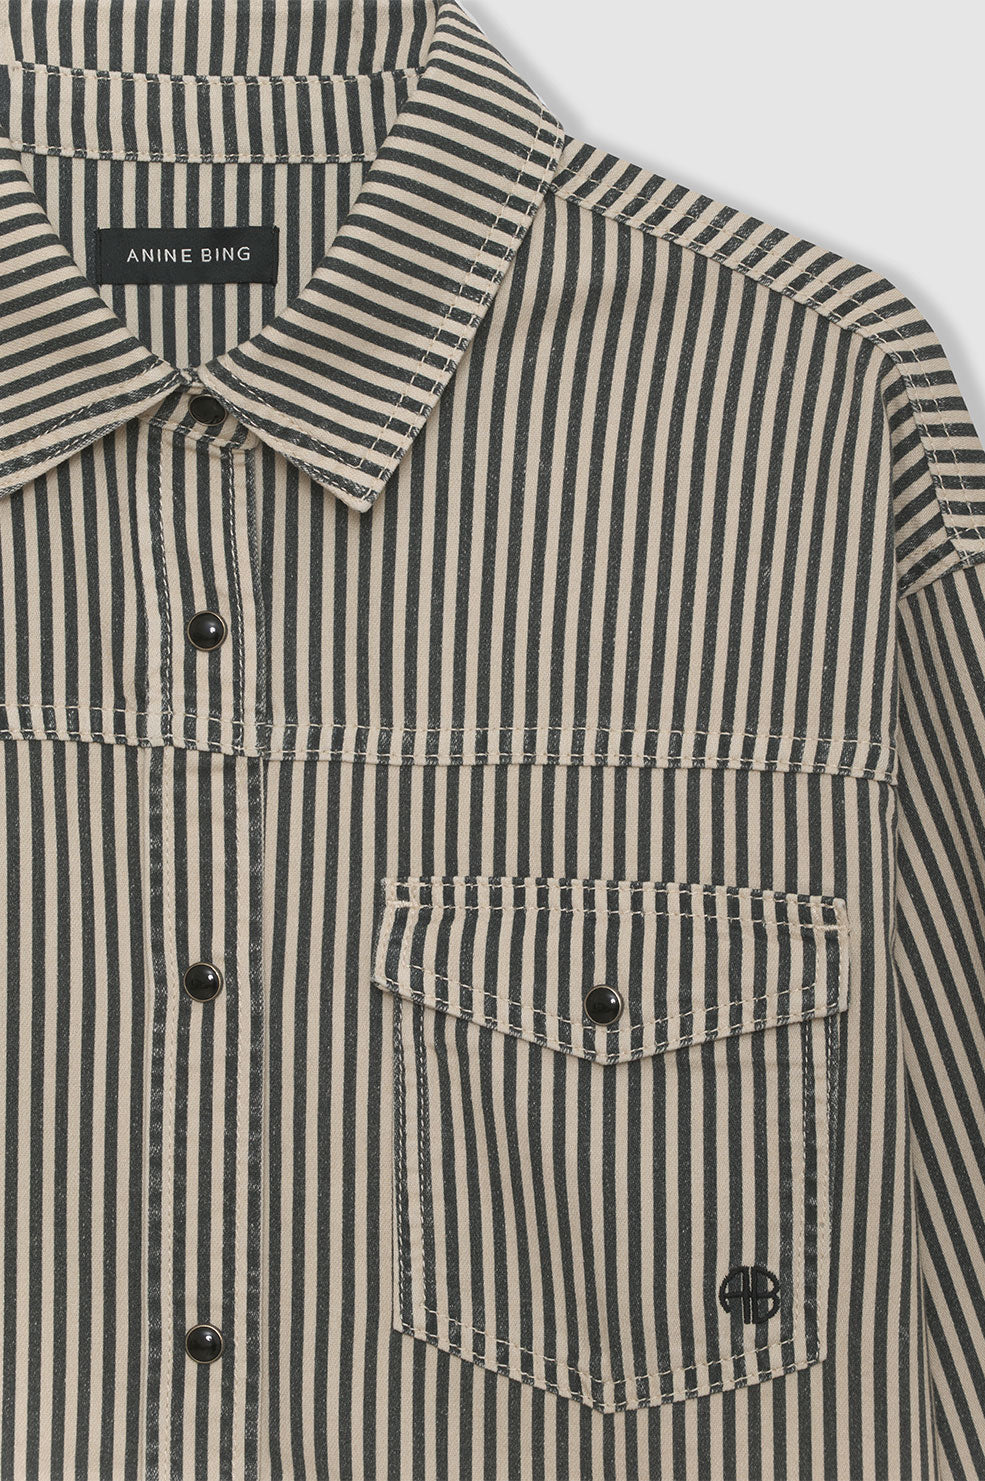 ANINE BING Sloan Shirt | Railroad Stripe